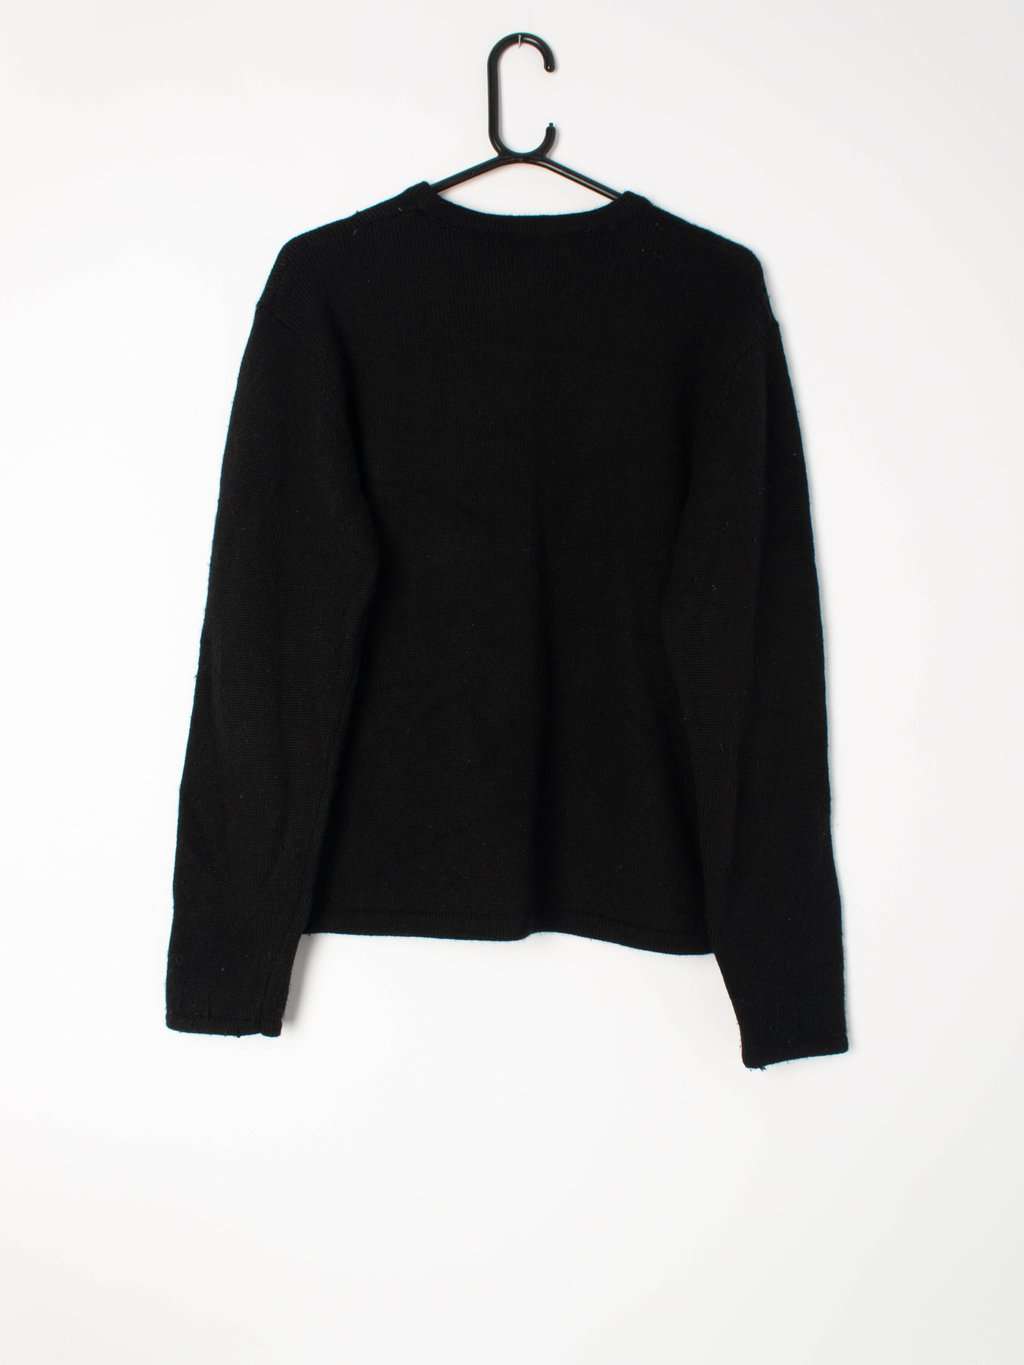 Merino wool plain black jumper with neon orange number '1' detail ...